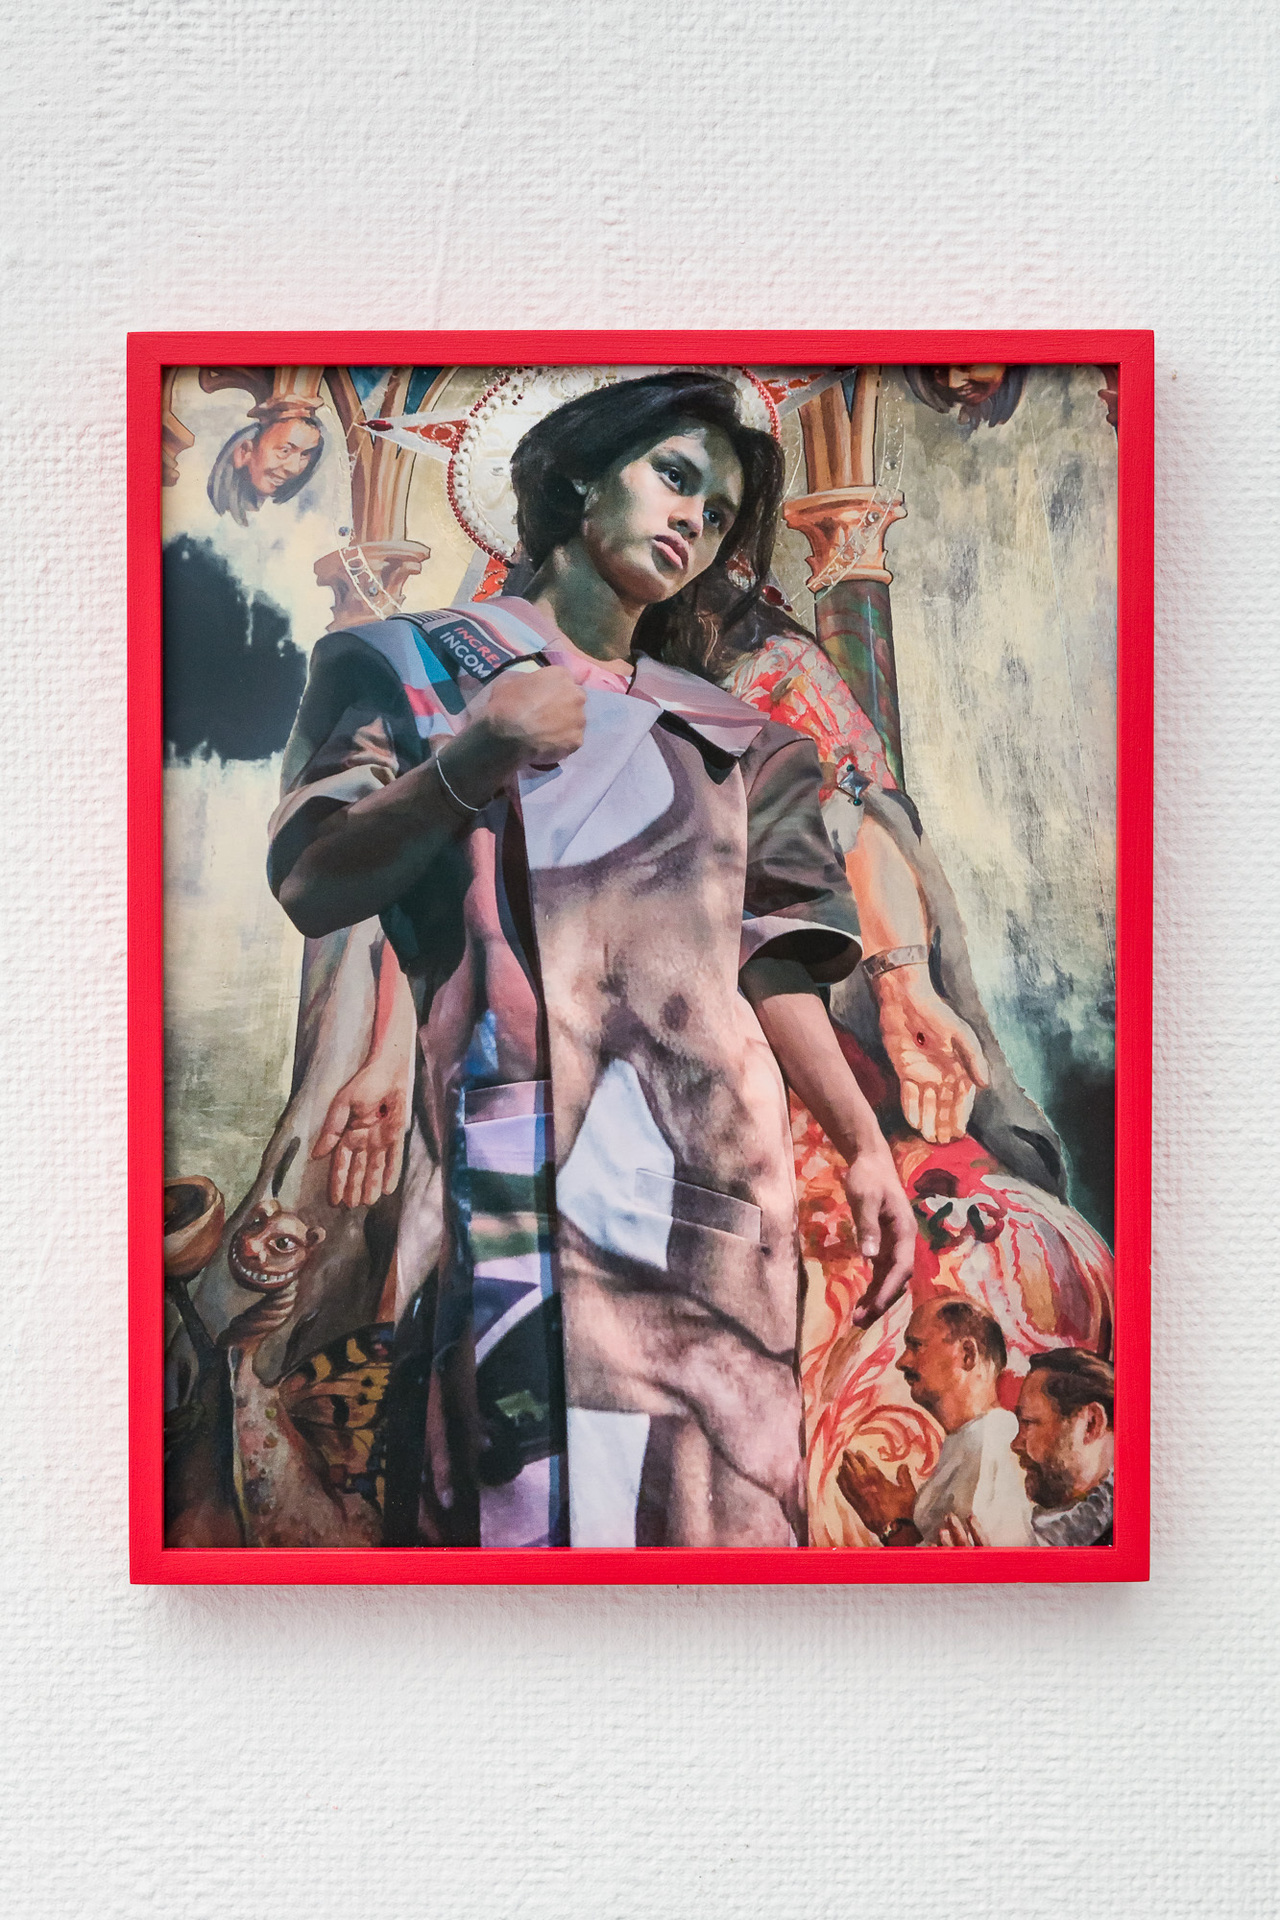 06. Daniel Moldoveanu, Tenwi, 2019, mixed media, print, glass, woodframe, 34.8 x 25.5 cm